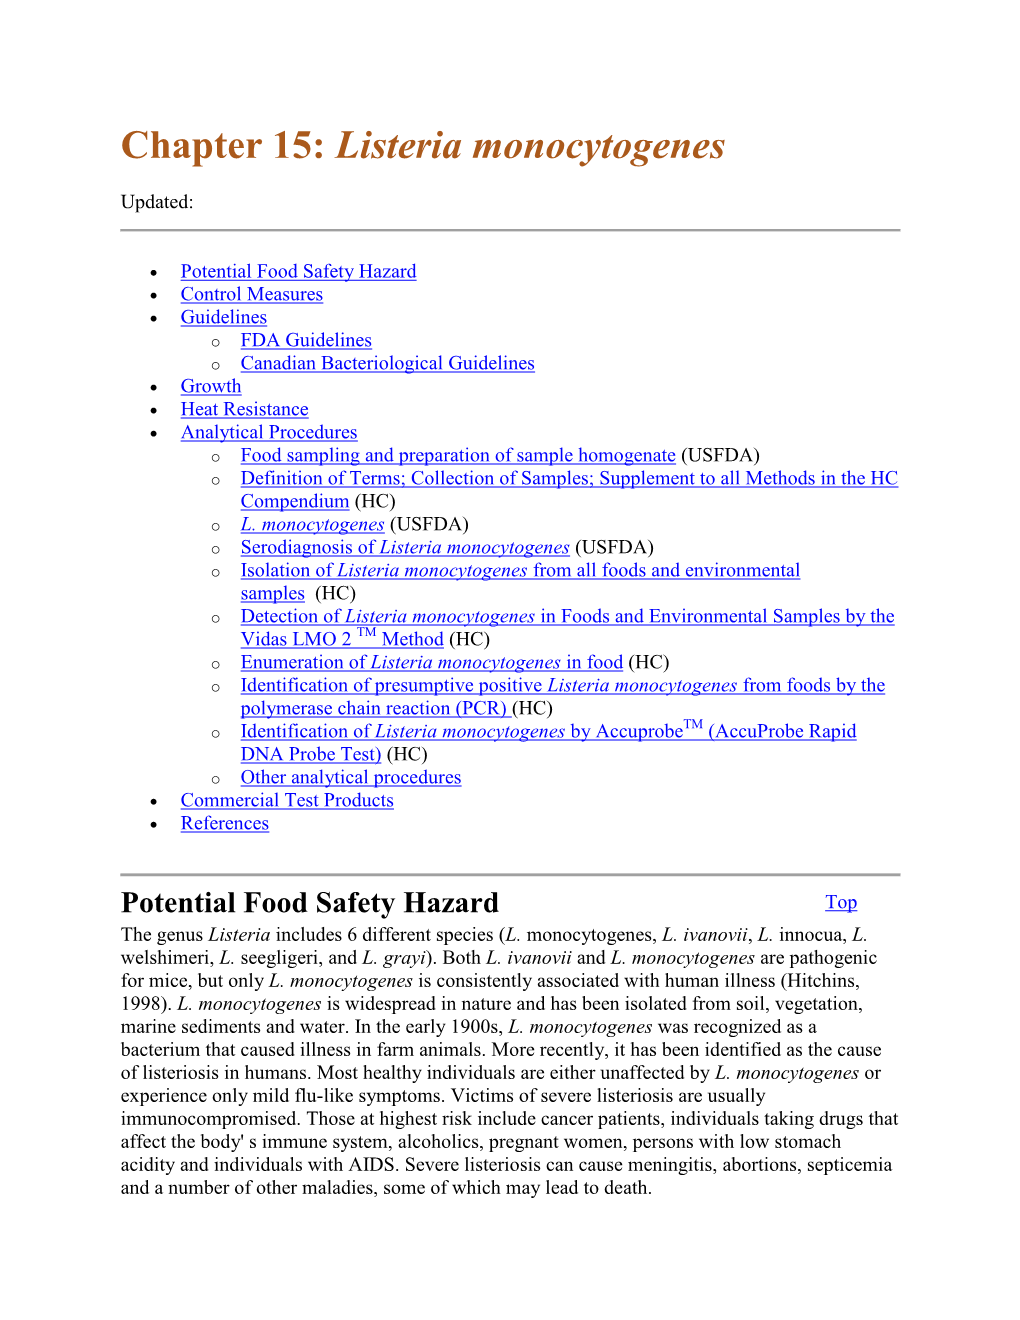 Chapter 15: Listeria Monocytogenes